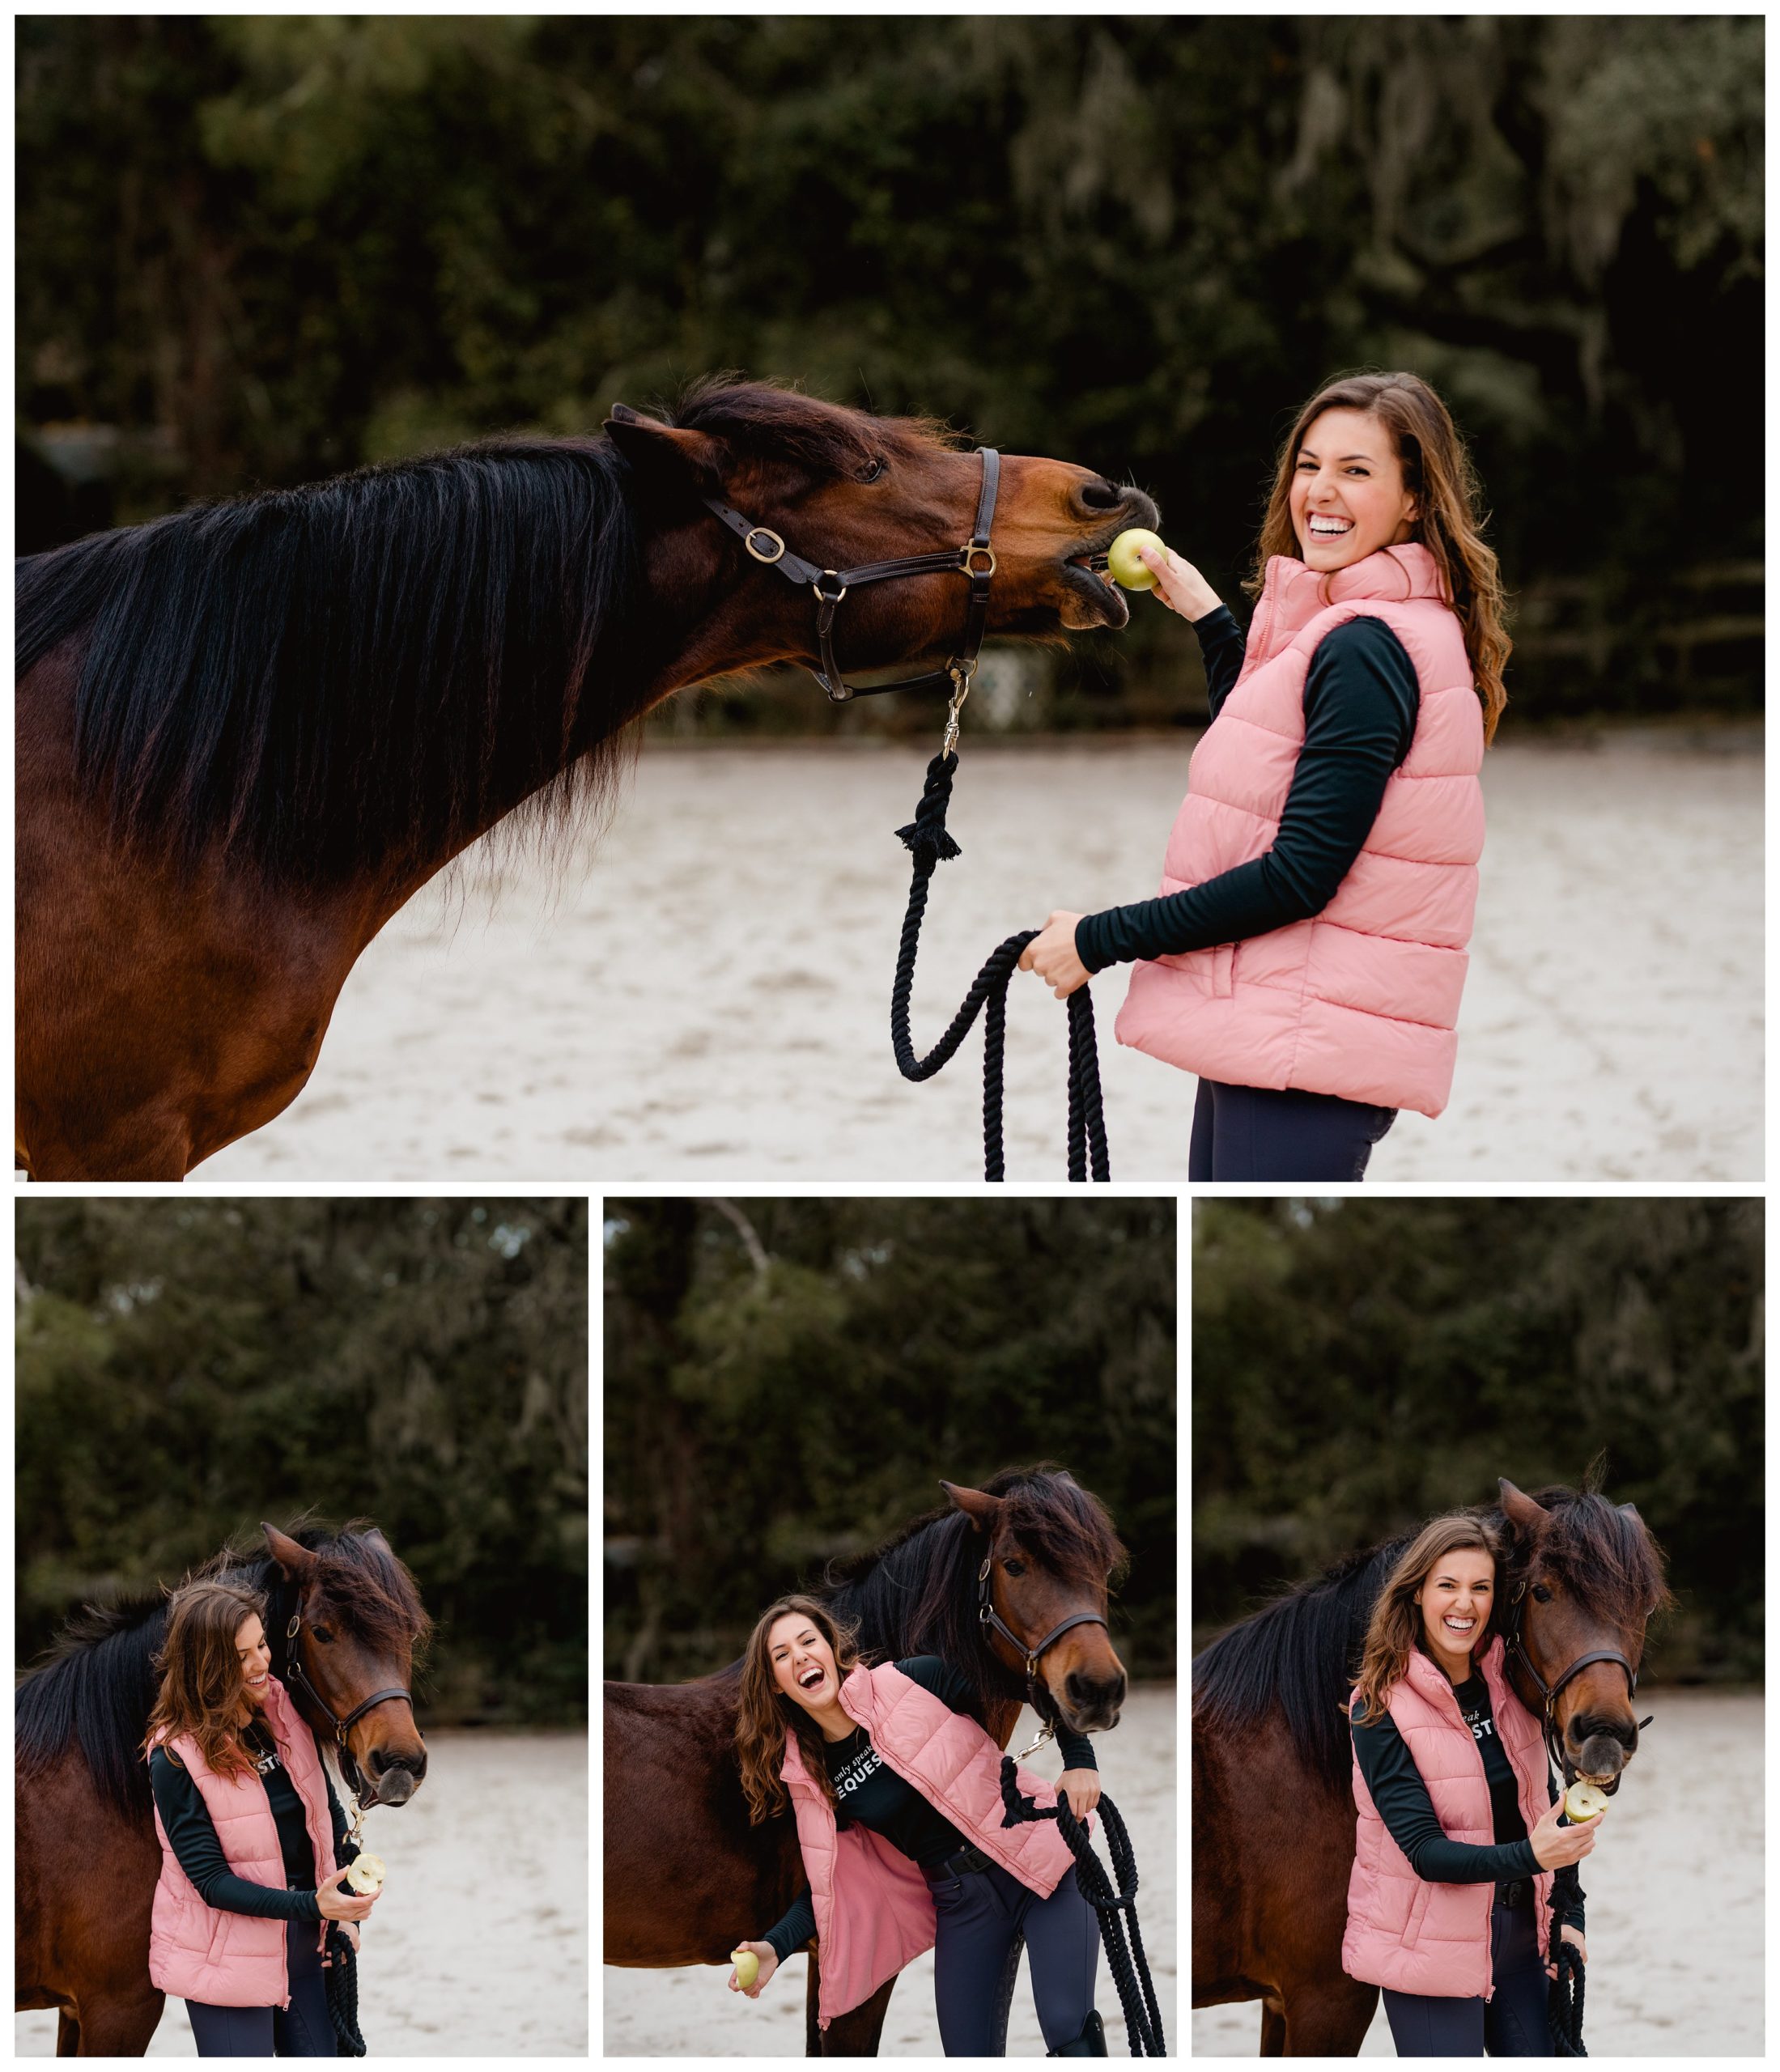 Cute photos of horse eating an apple during a photo shoot.